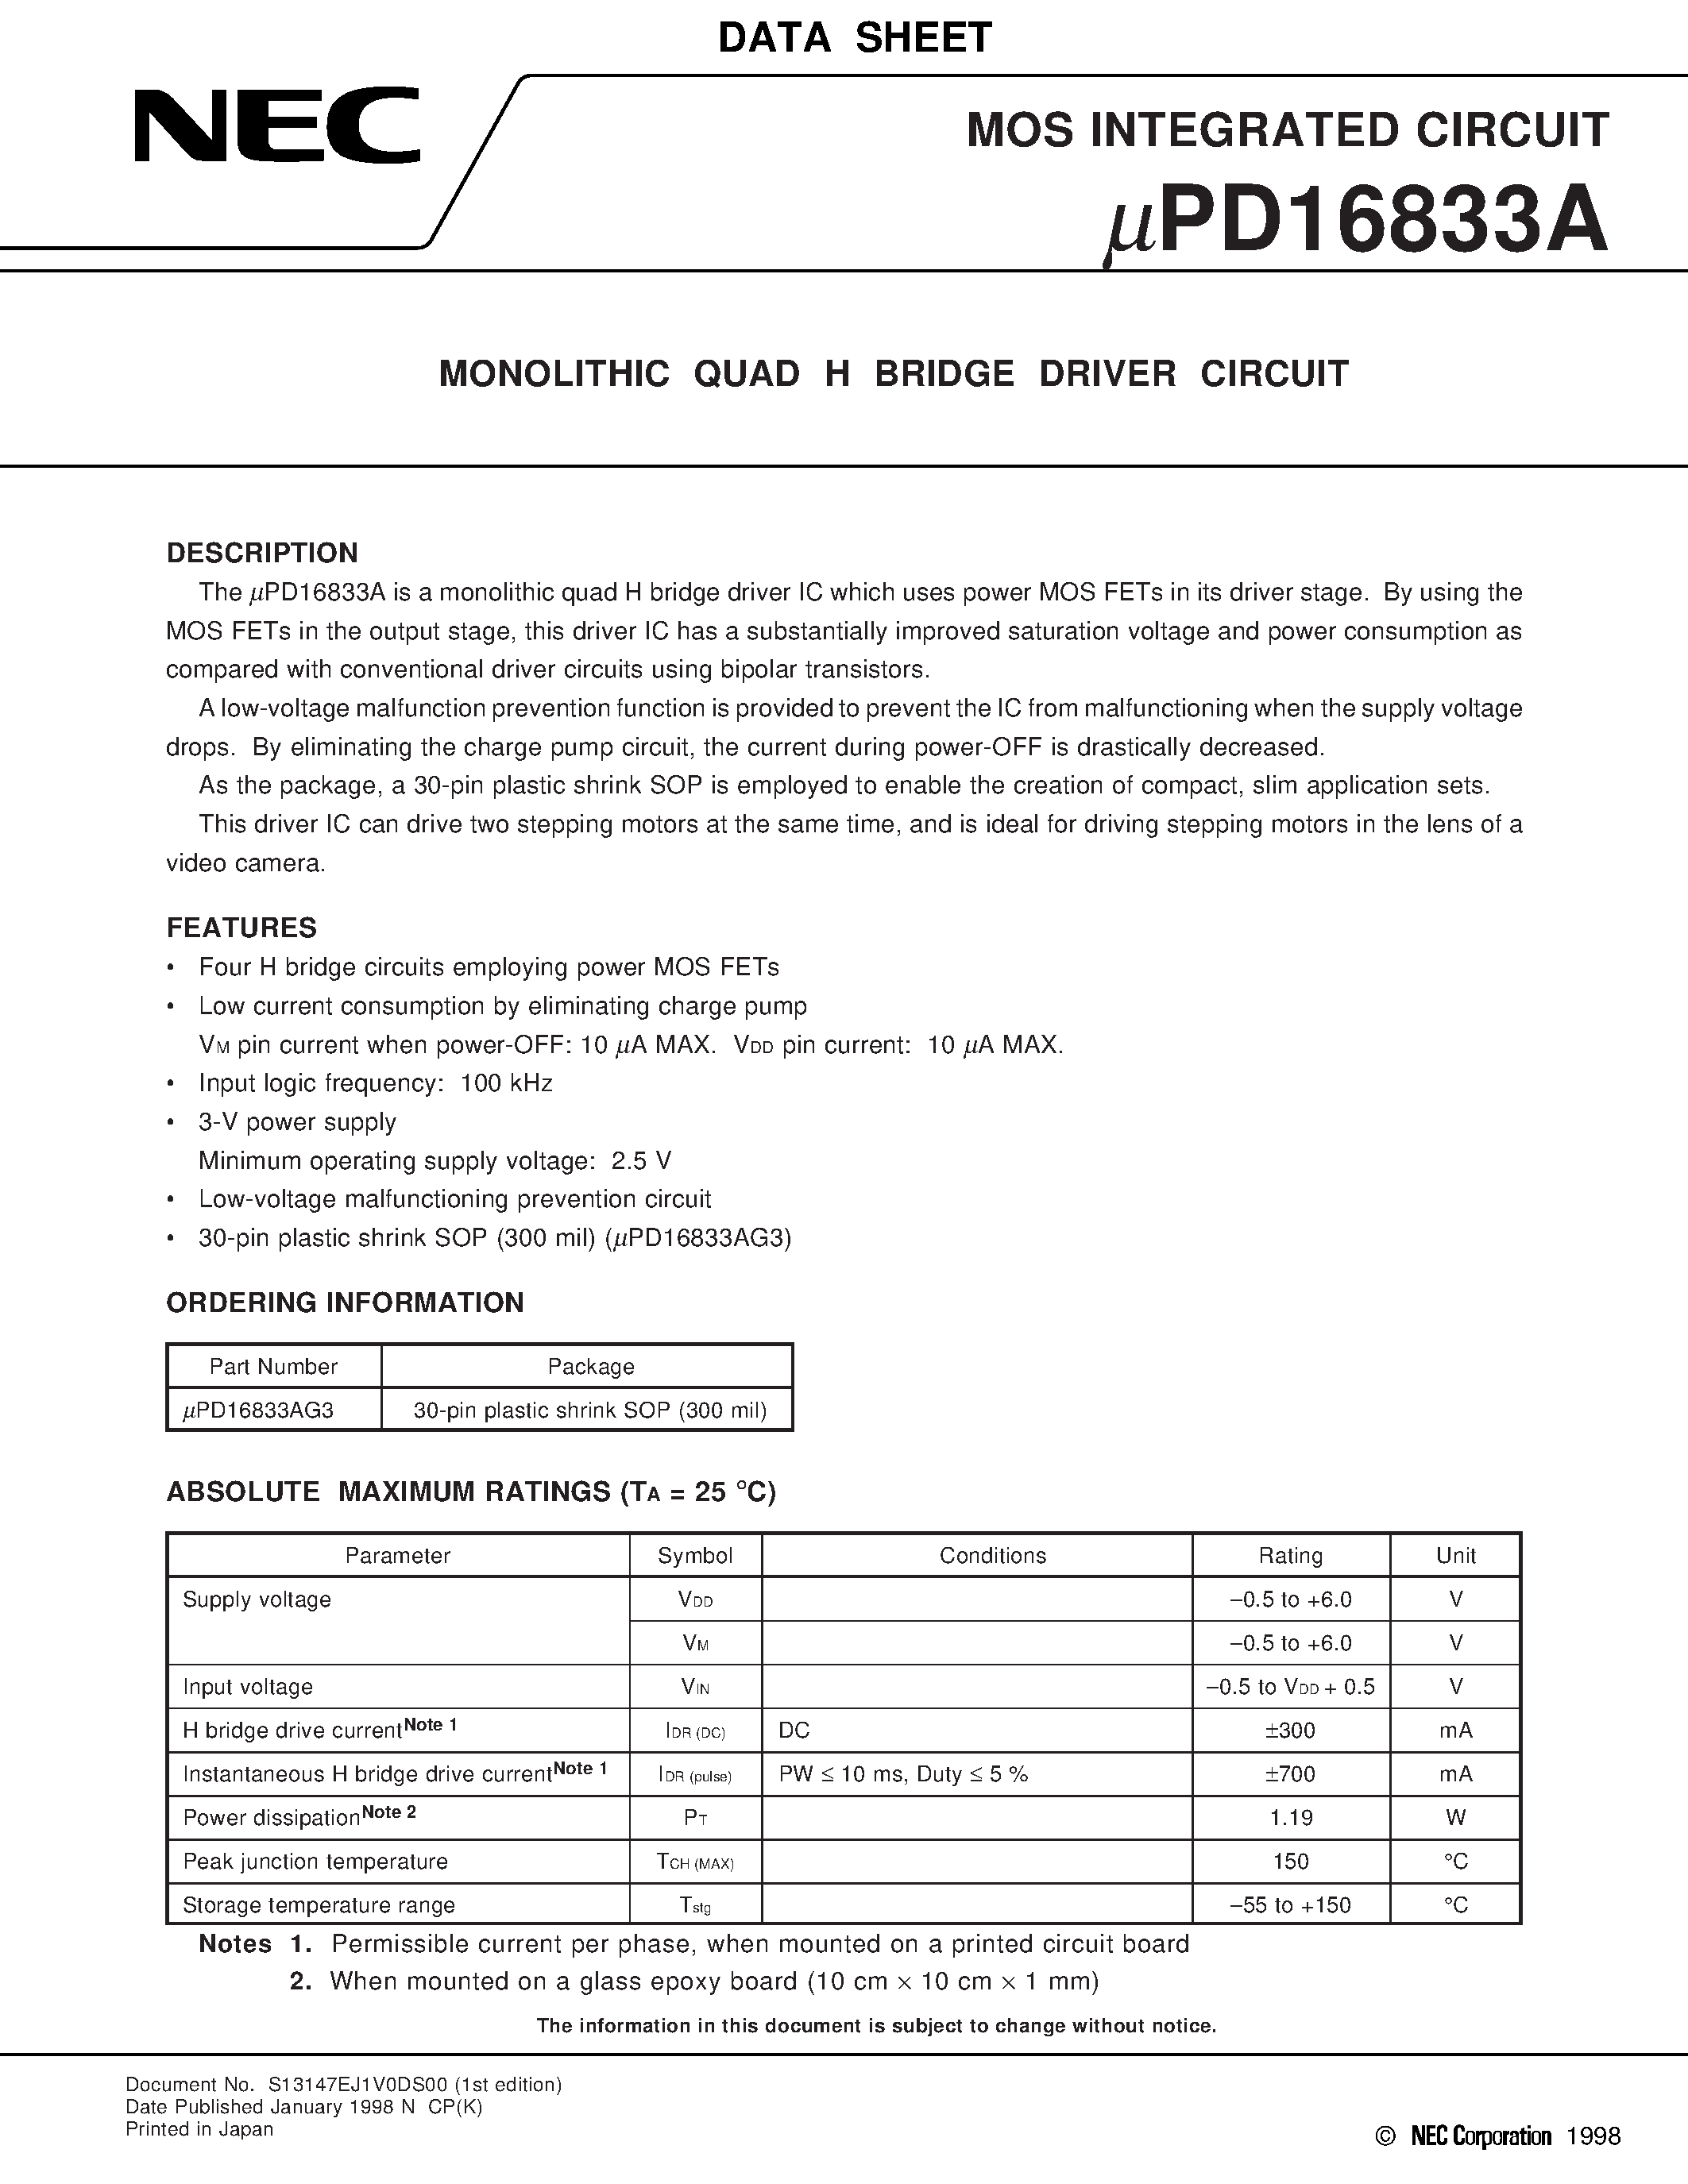 Datasheet UPD16833AG3 - MONOLITHIC QUAD H BRIDGE DRIVER CIRCUIT page 1